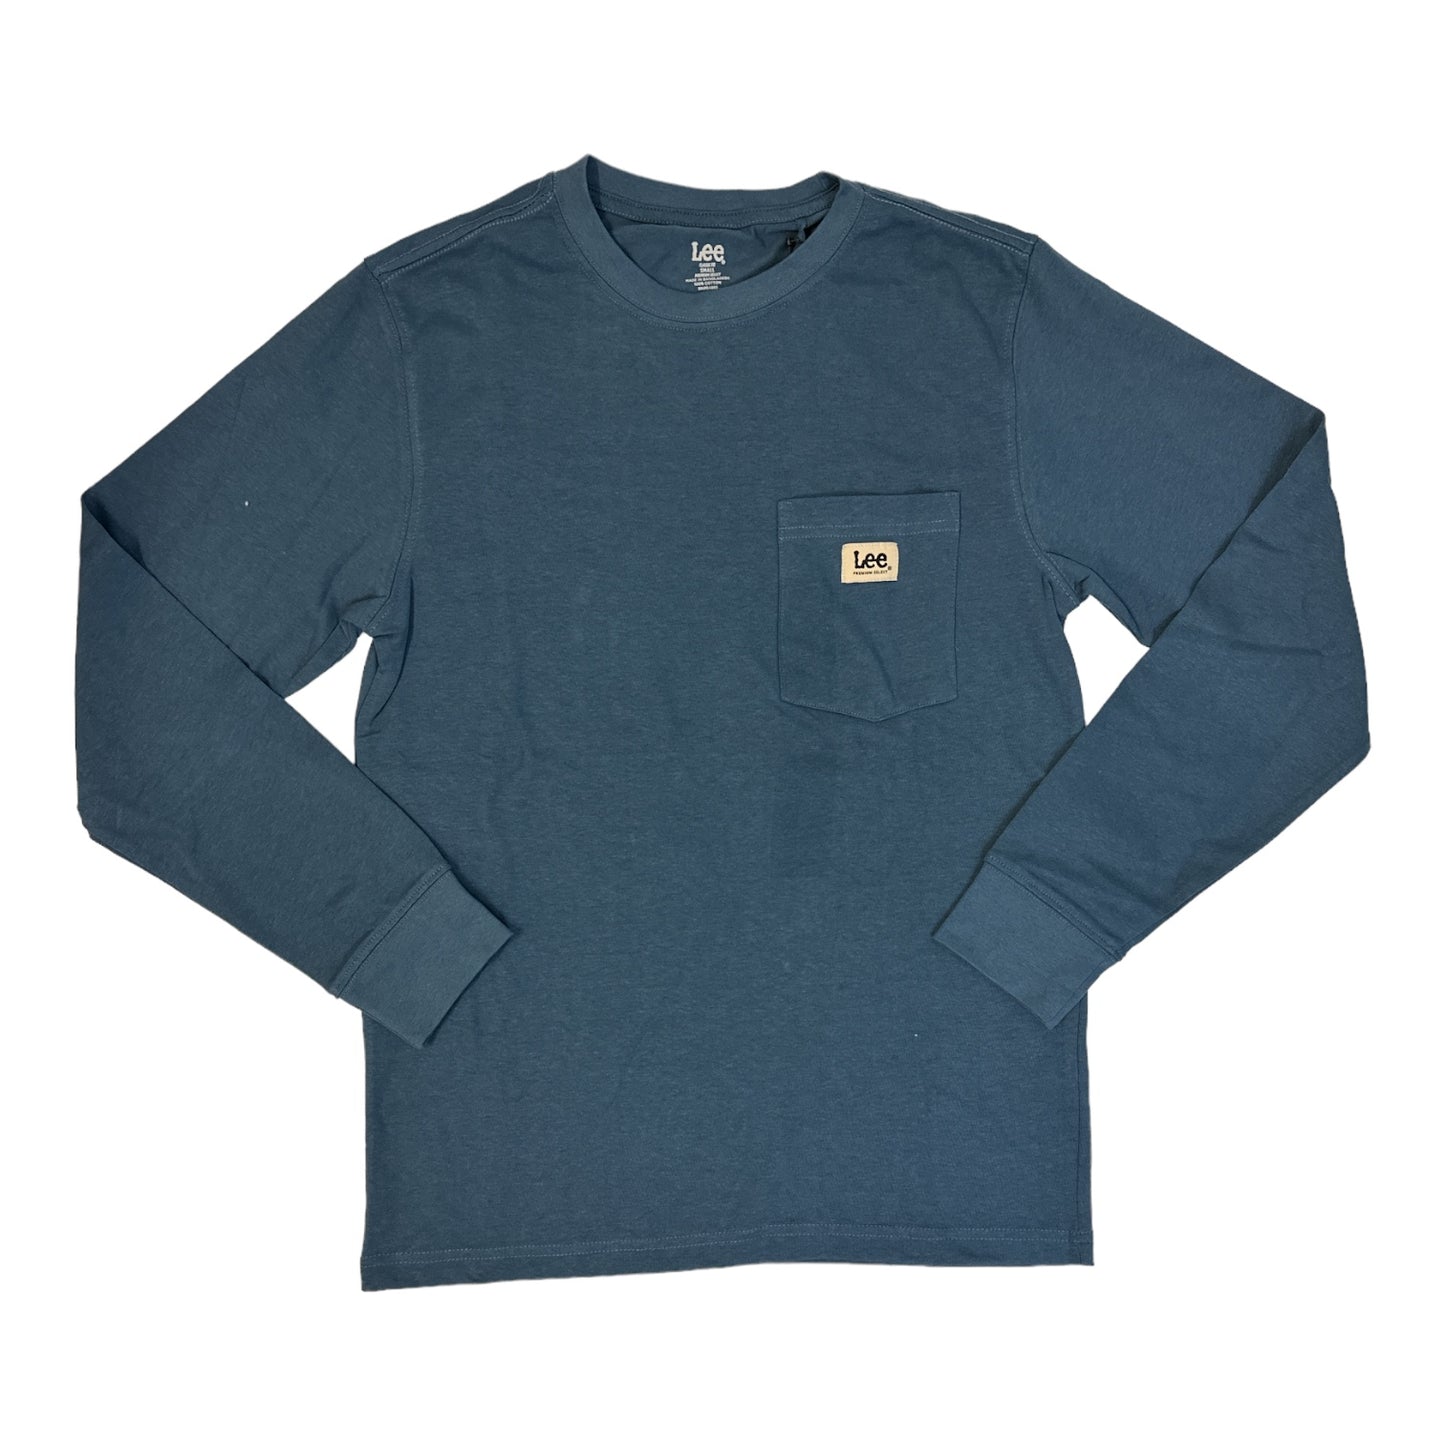 Lee Men's Long Sleeve Cotton Workwear Pocket T-Shirt